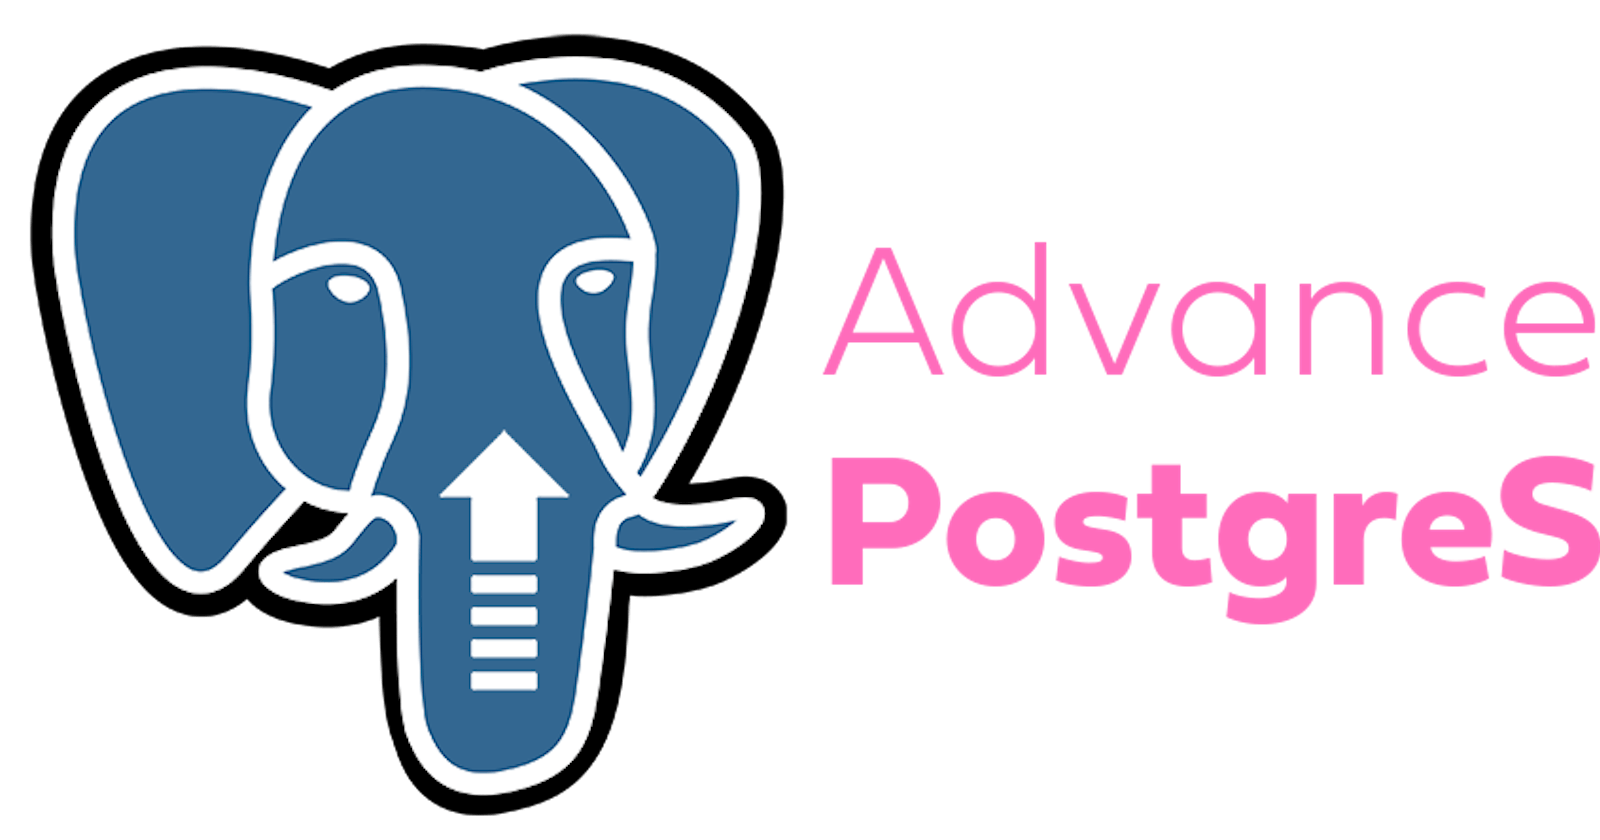 Advanced PostgreSQL Features: A Guide